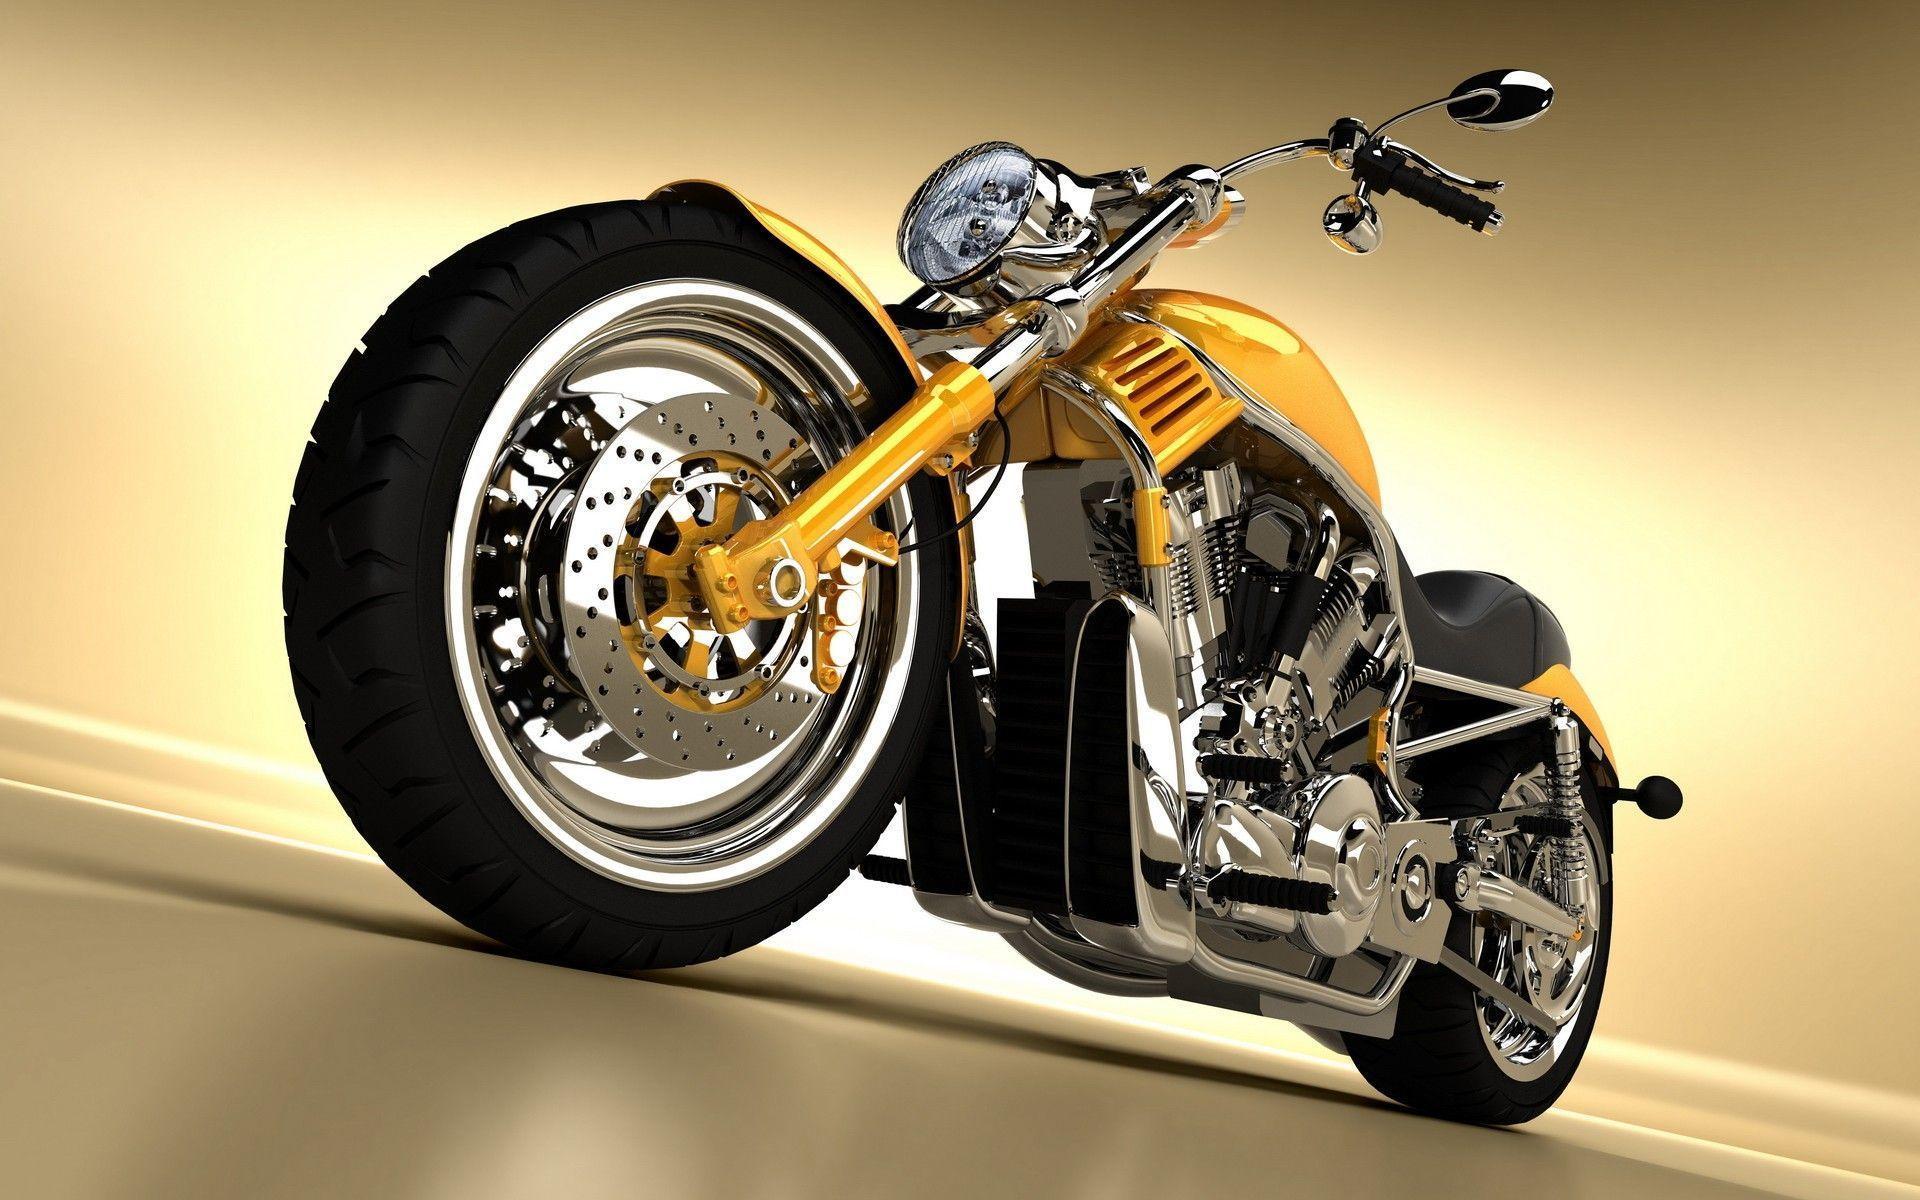 Harley Davidson Dorada Tama Download Free Image, HQ Background